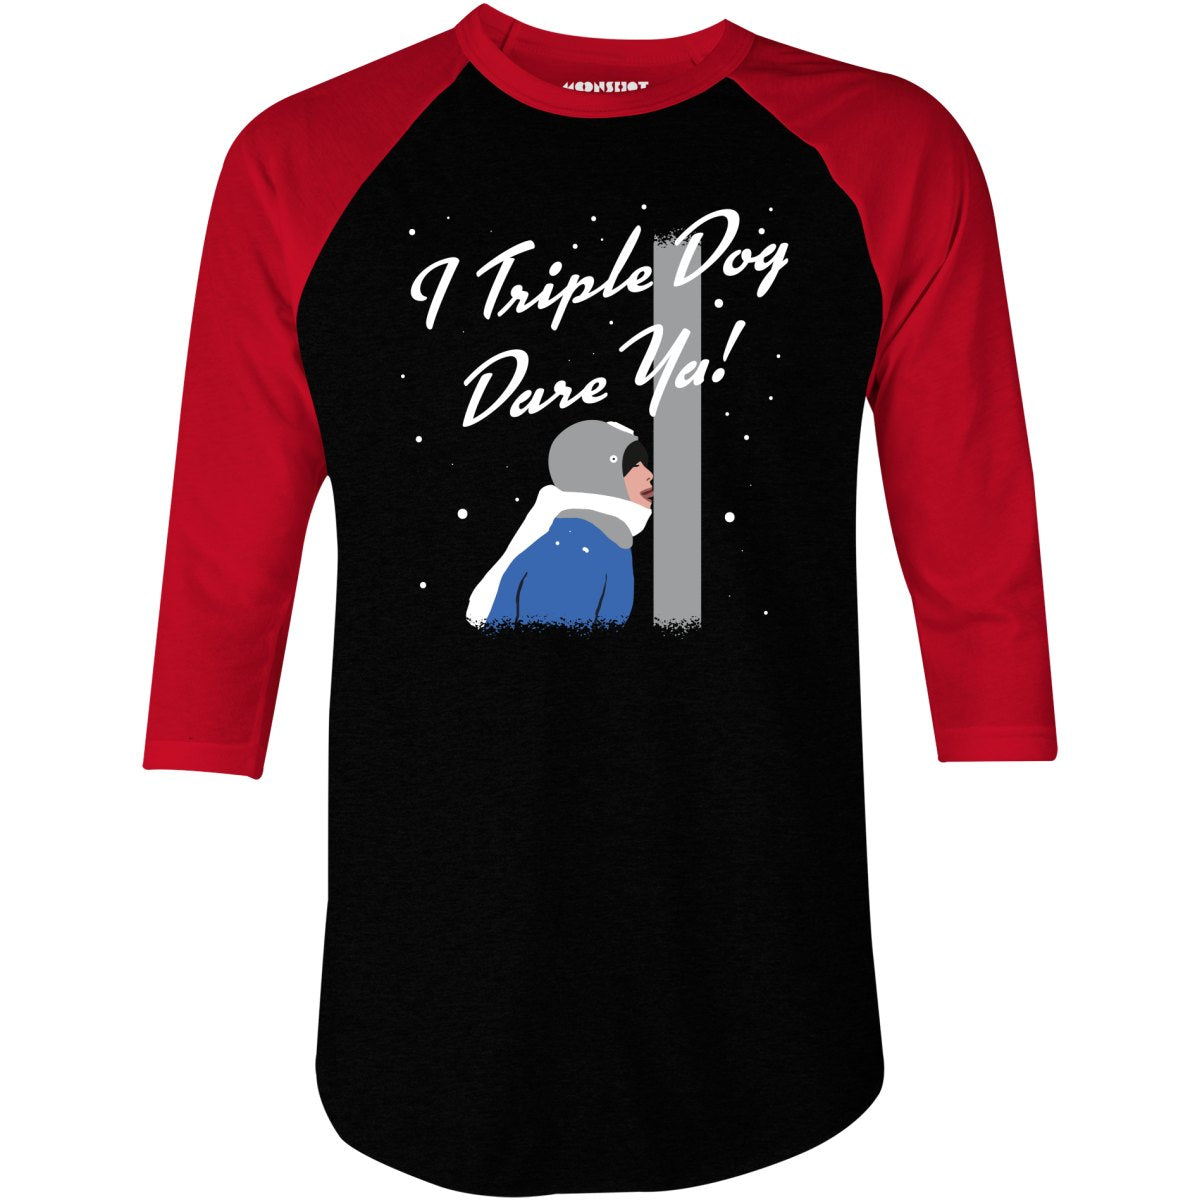 I Triple Dog Dare Ya! - 3/4 Sleeve Raglan T-Shirt